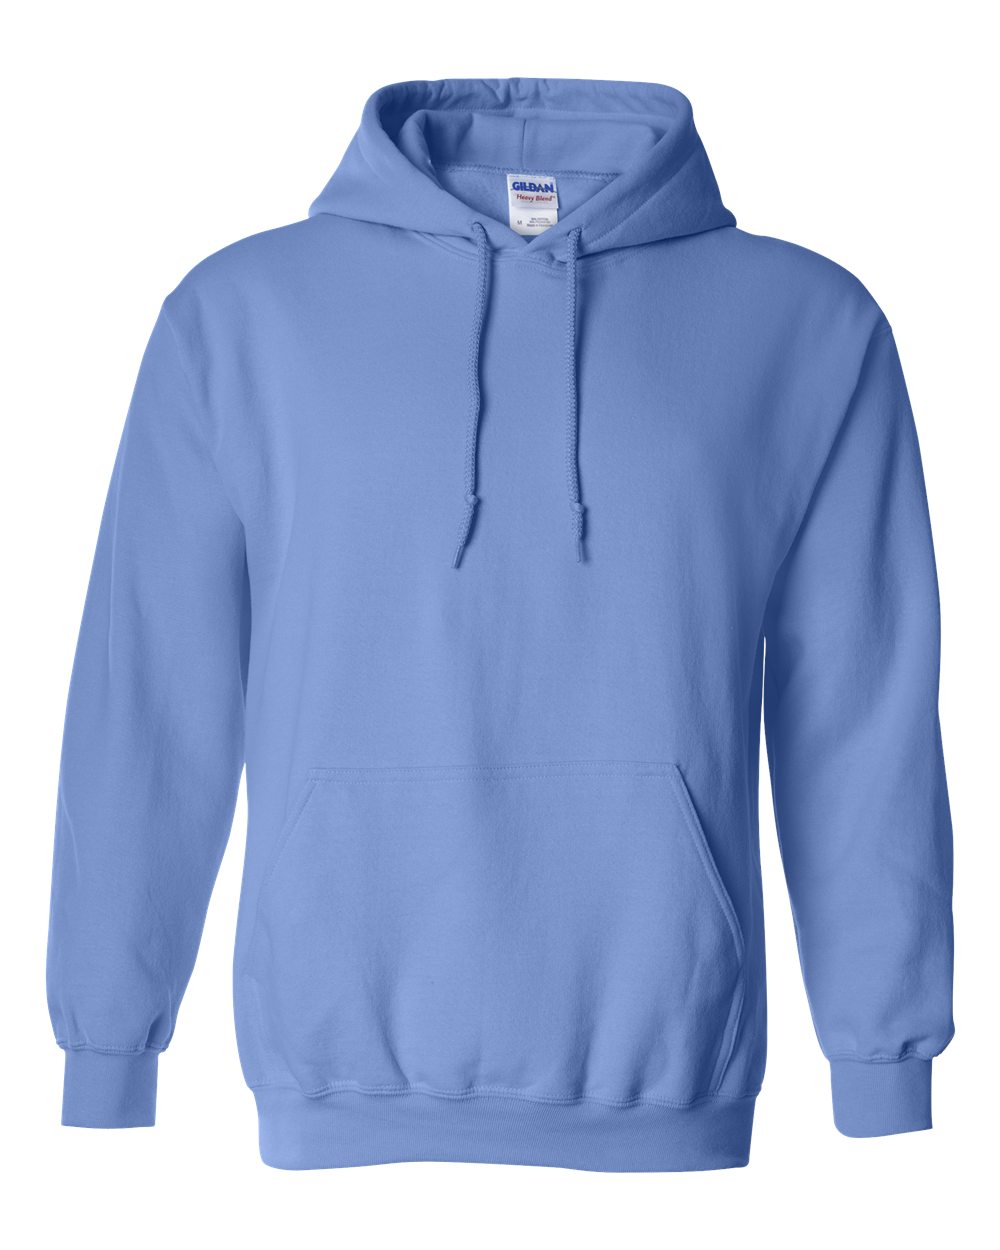 View Item: Gildan - Heavy Blend Hooded Sweatshirt - 18500 :: TeePlaza